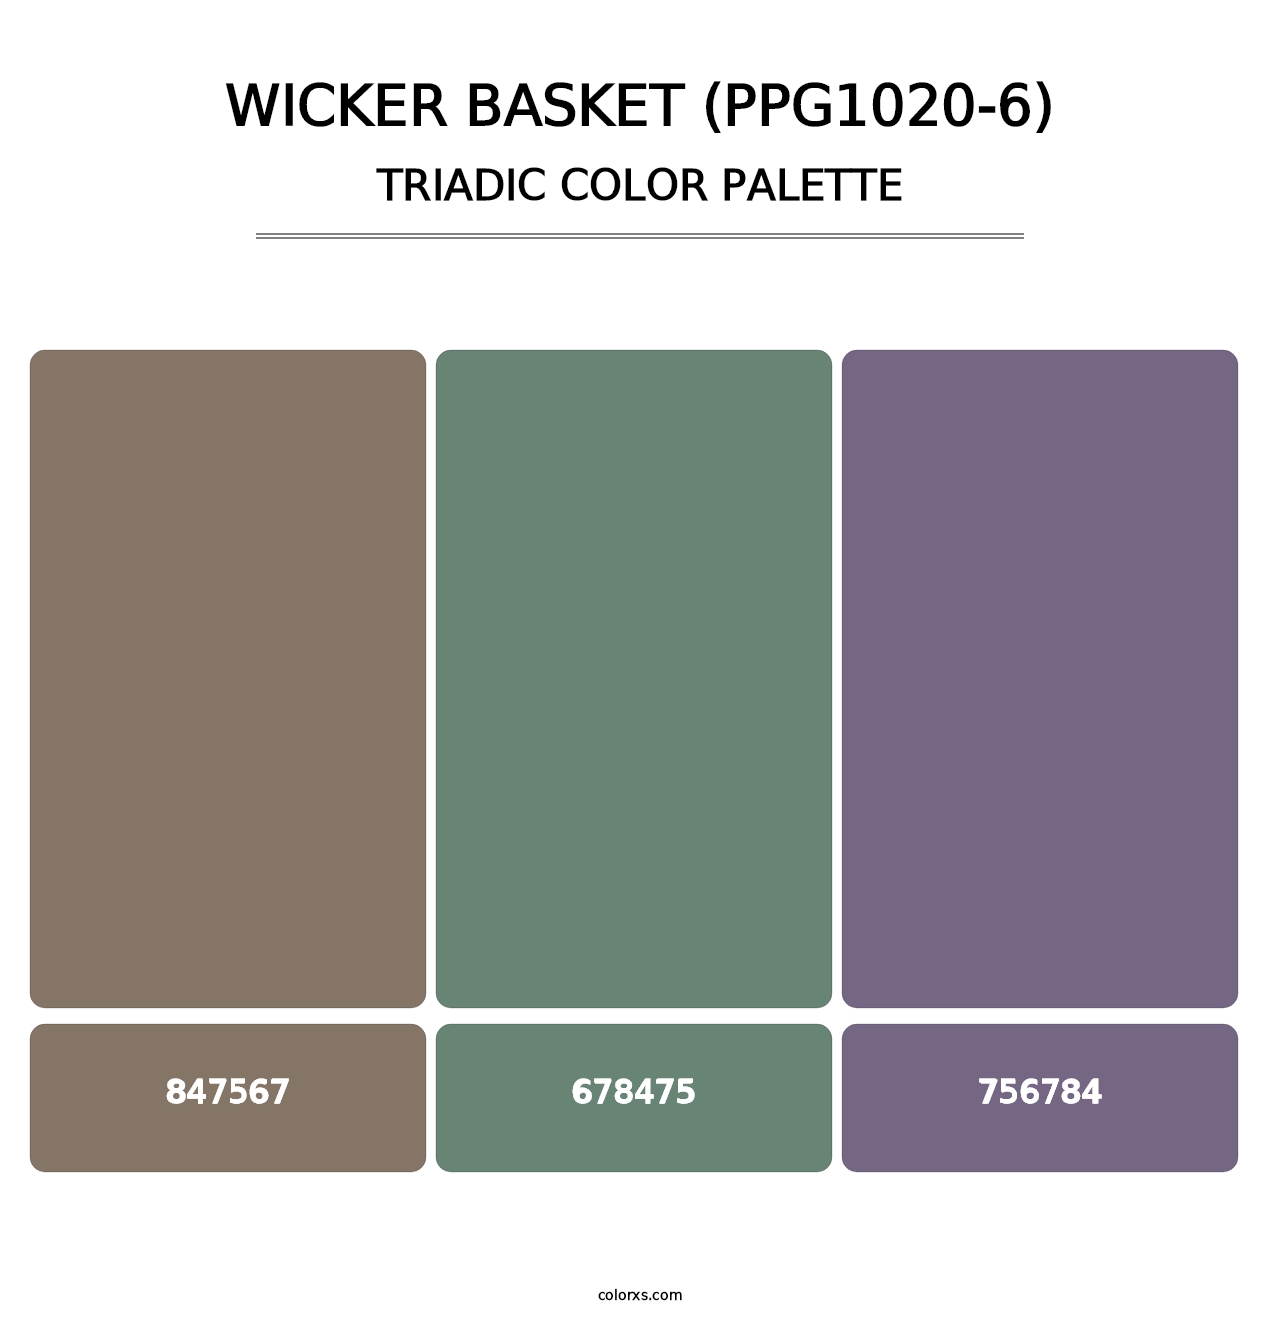 Wicker Basket (PPG1020-6) - Triadic Color Palette